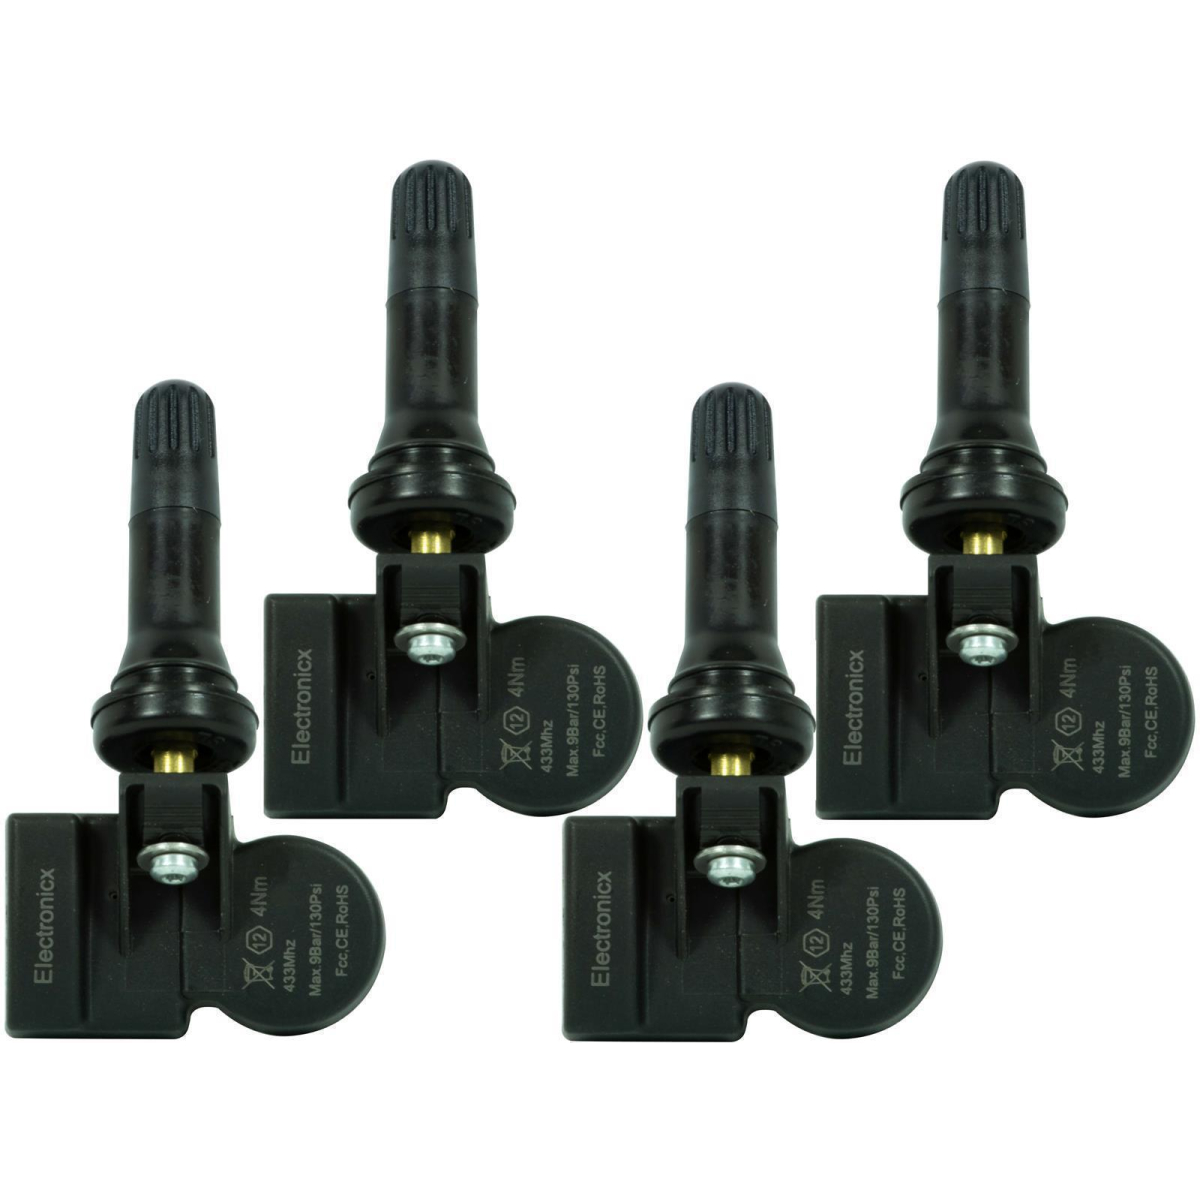 4 tire pressure sensors rdks sensors rubber valve for Lexus LX Series J200 Without Pressure Display 04.2014-10.2015